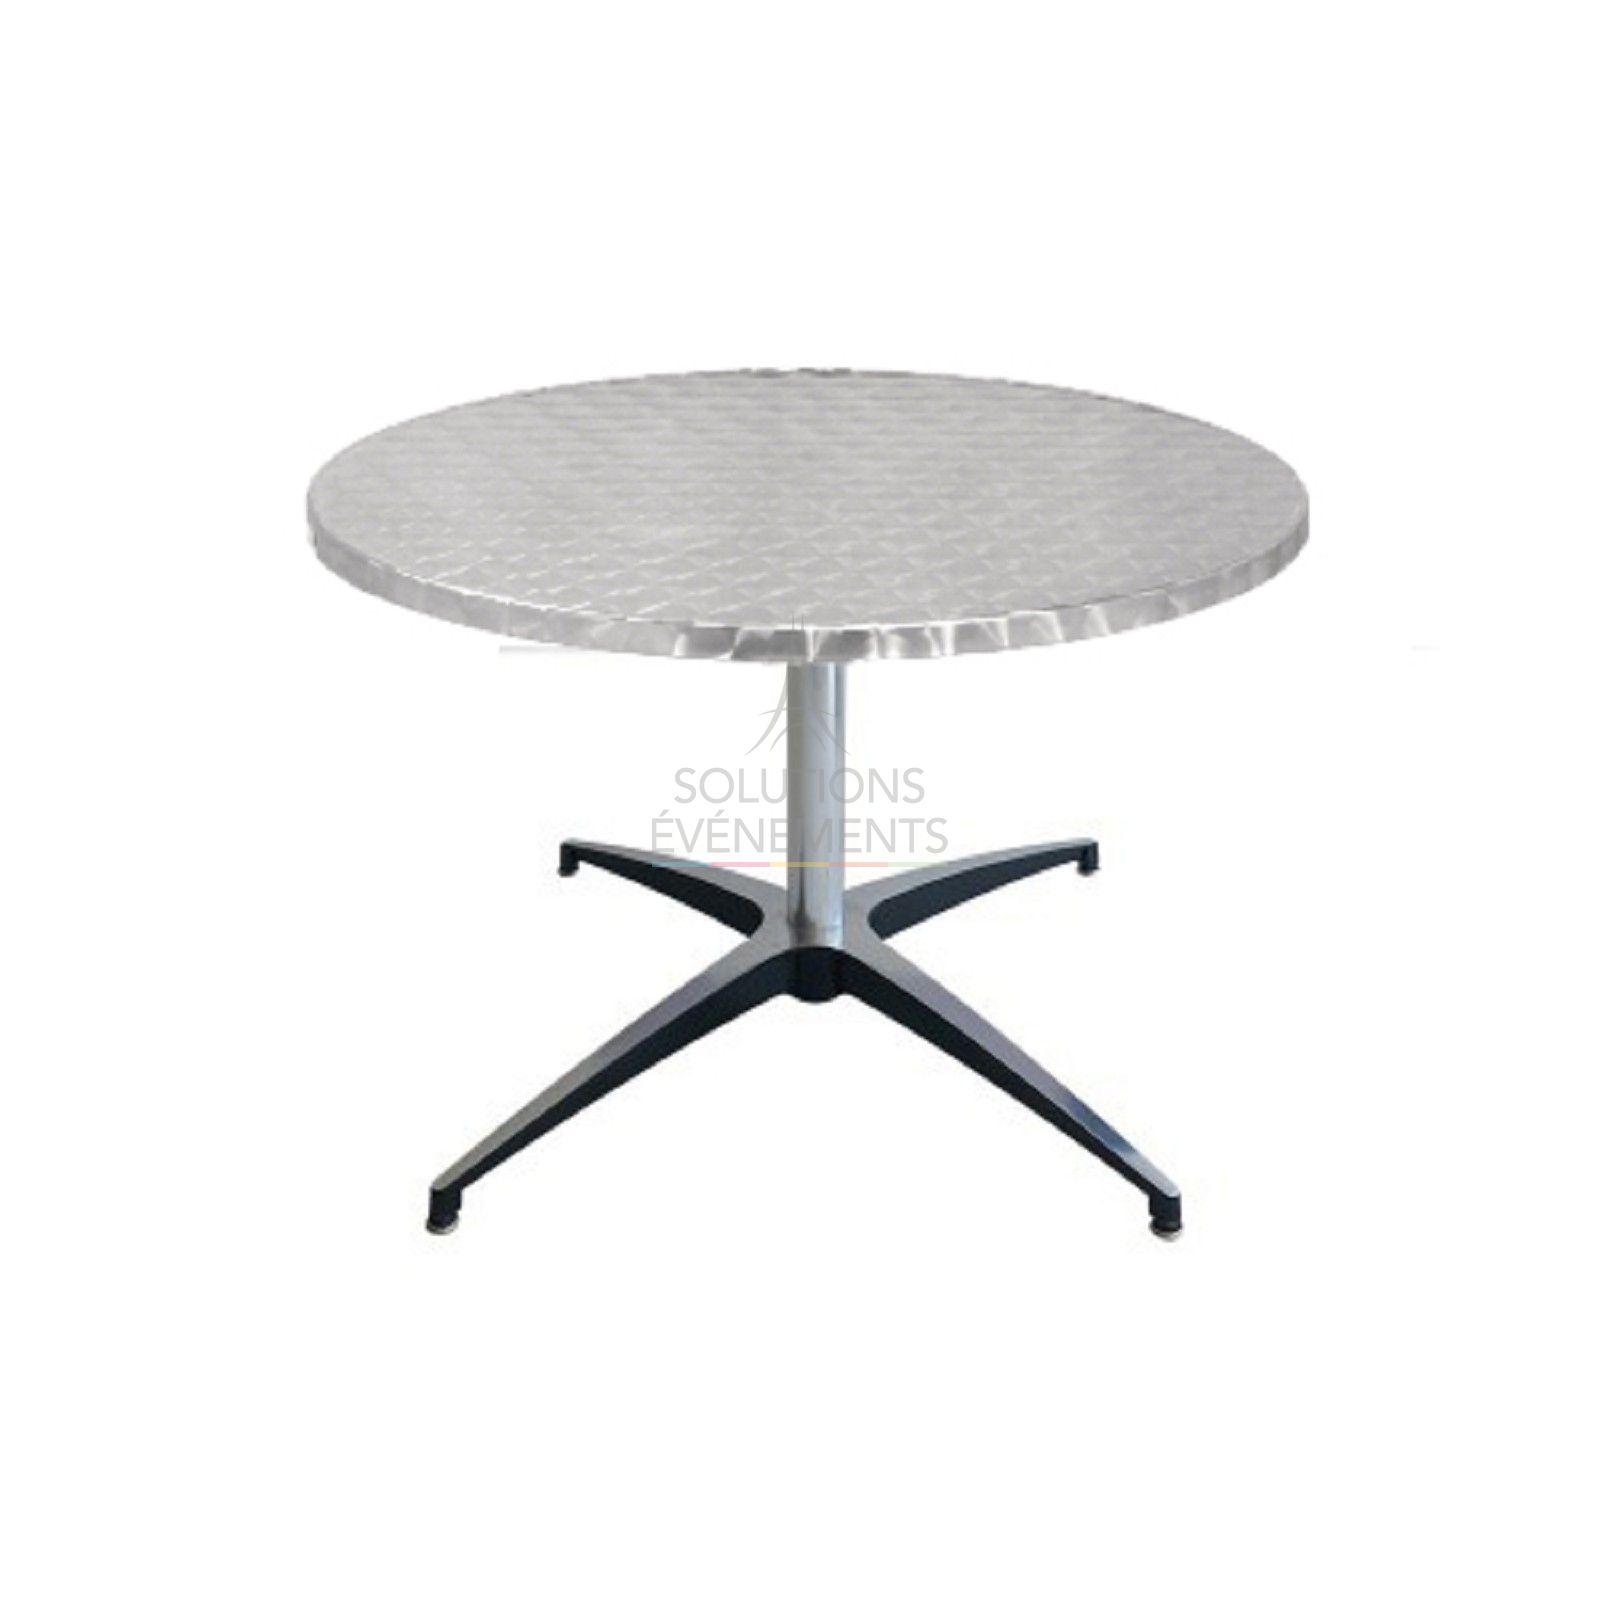 Rental of bistro coffee table diameter 60cm